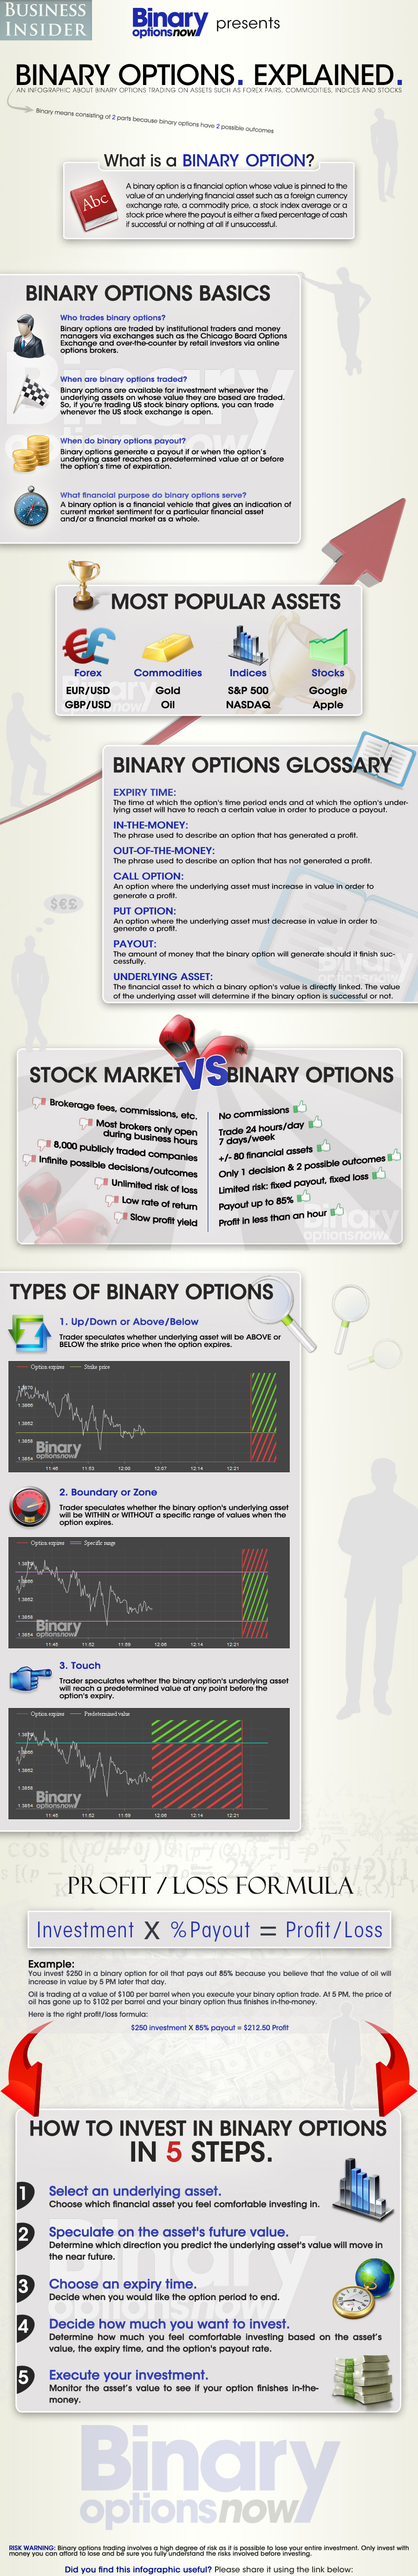 Binary options business plan